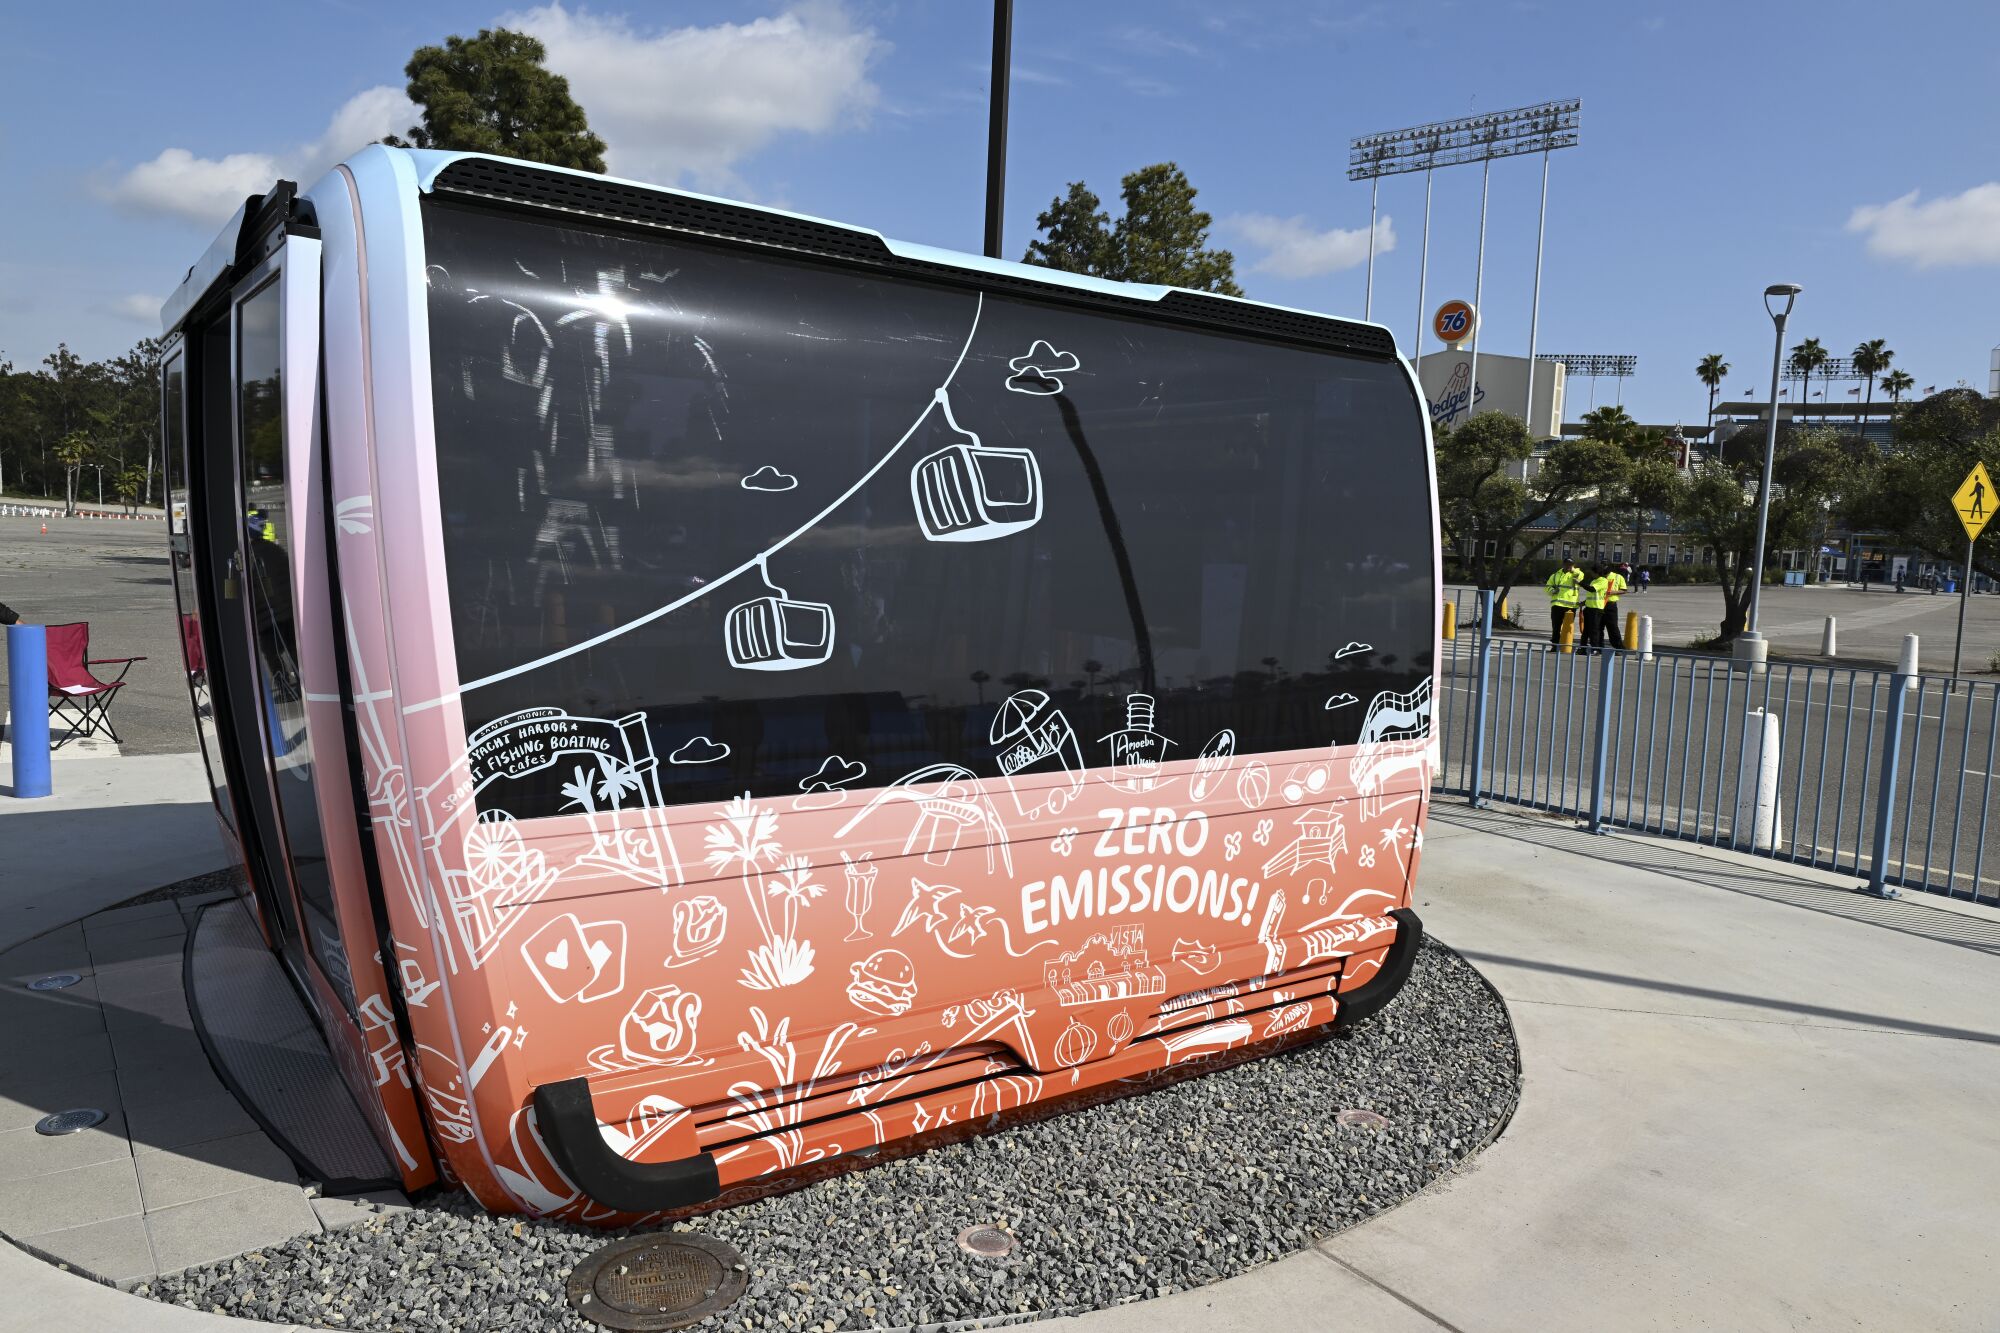 A gondola cabin on display in Dodger Stadium parking lot.